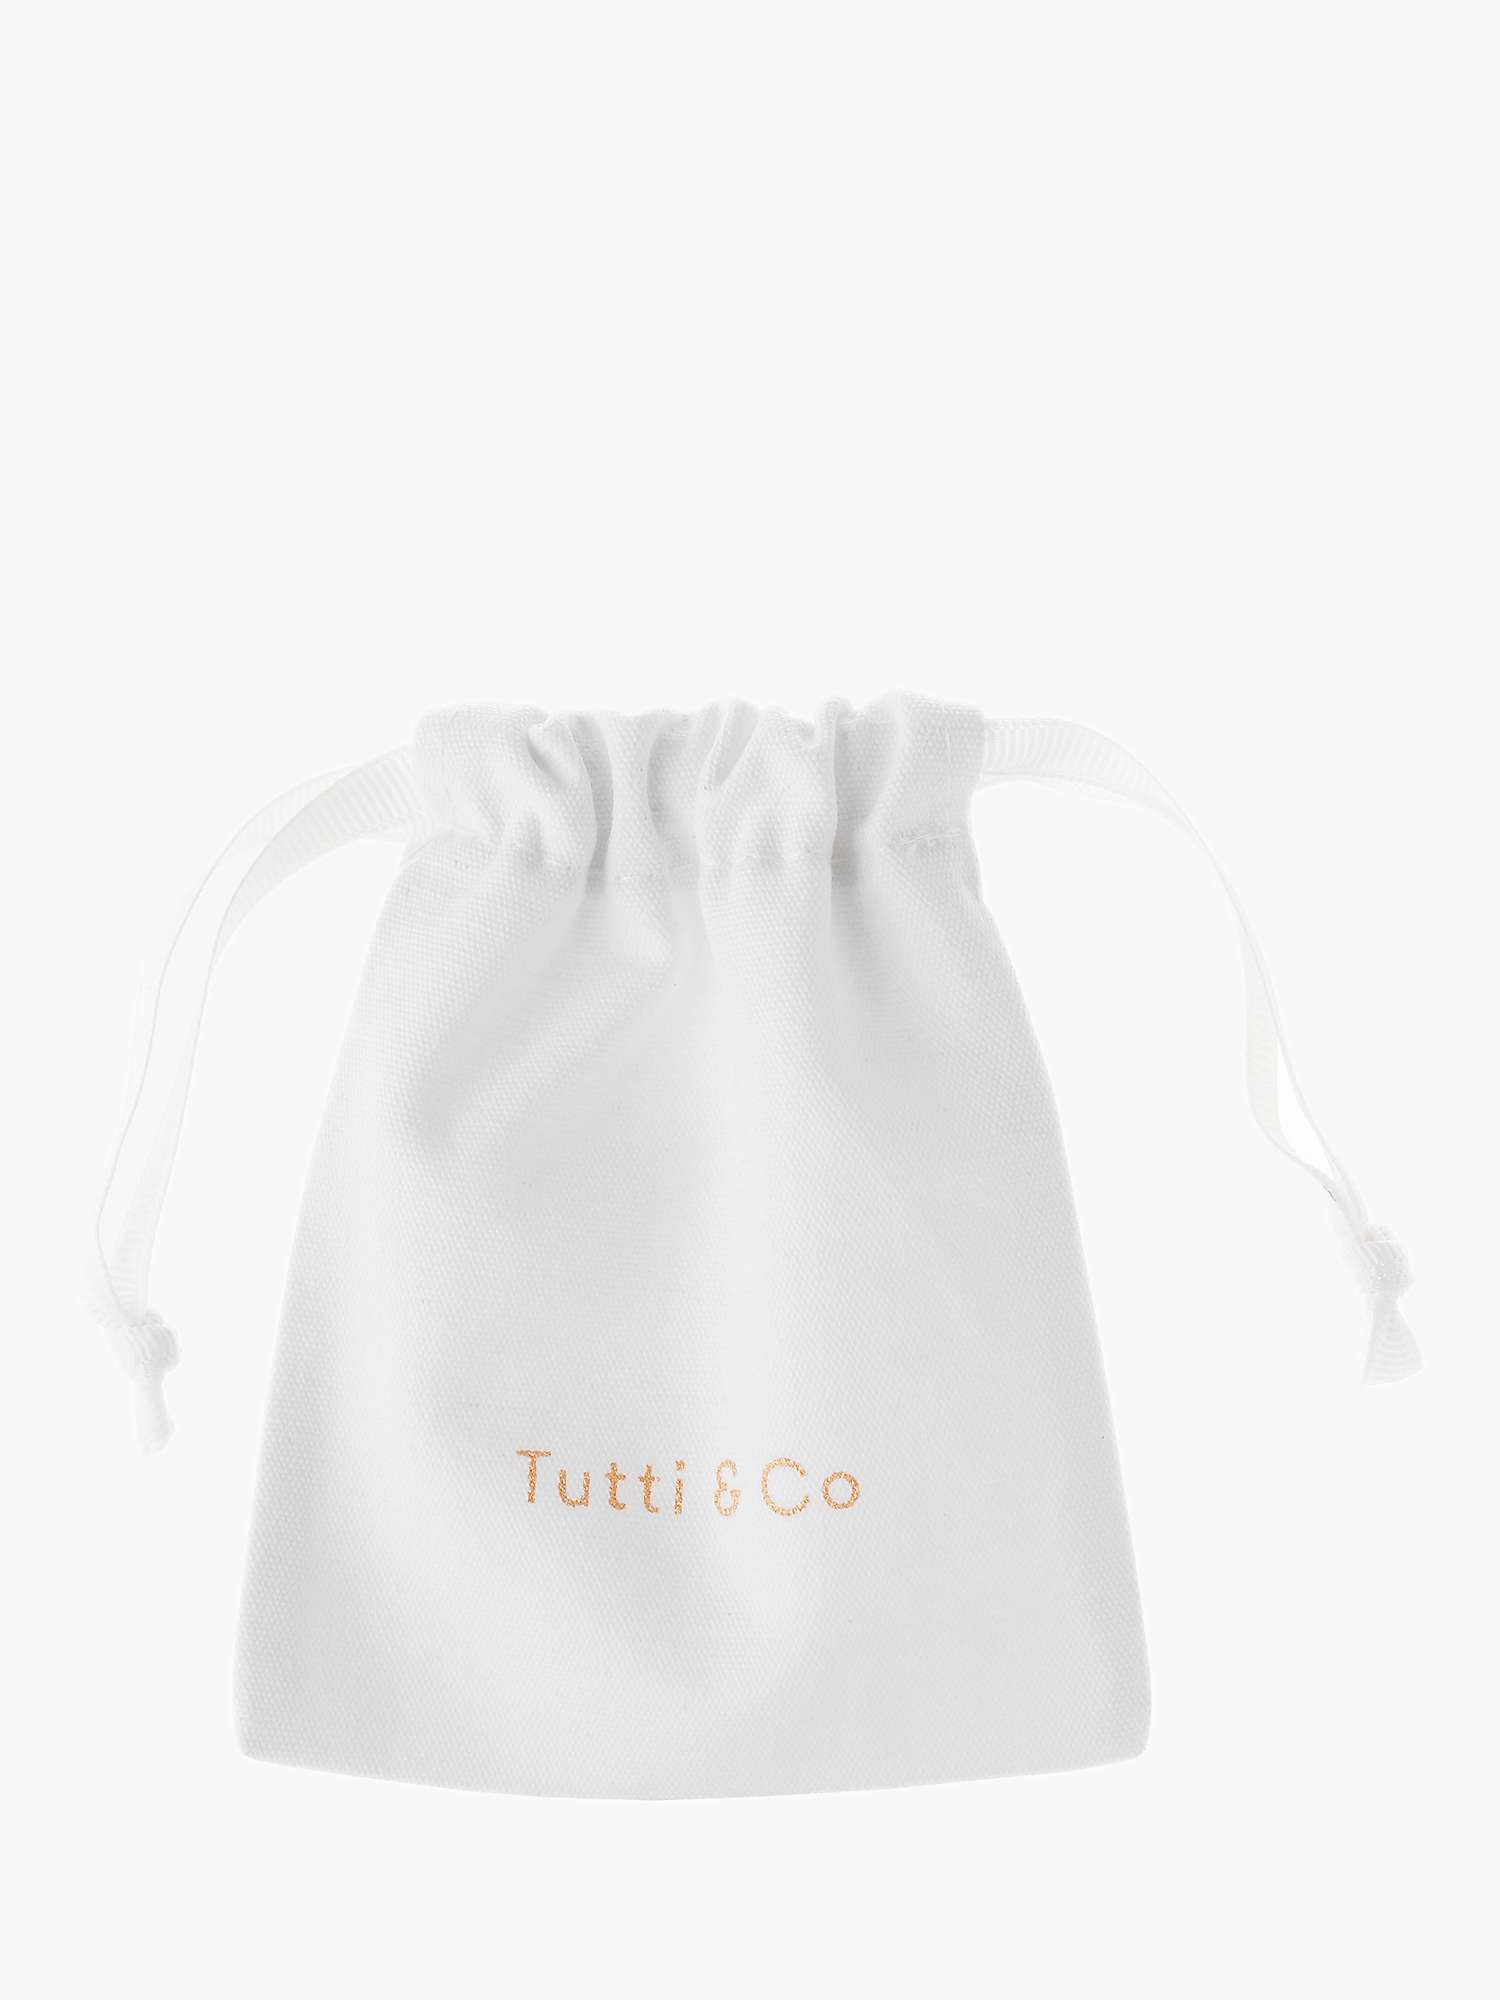 Buy Tutti & Co September Birthstone Hoop Earrings, Lapis Online at johnlewis.com